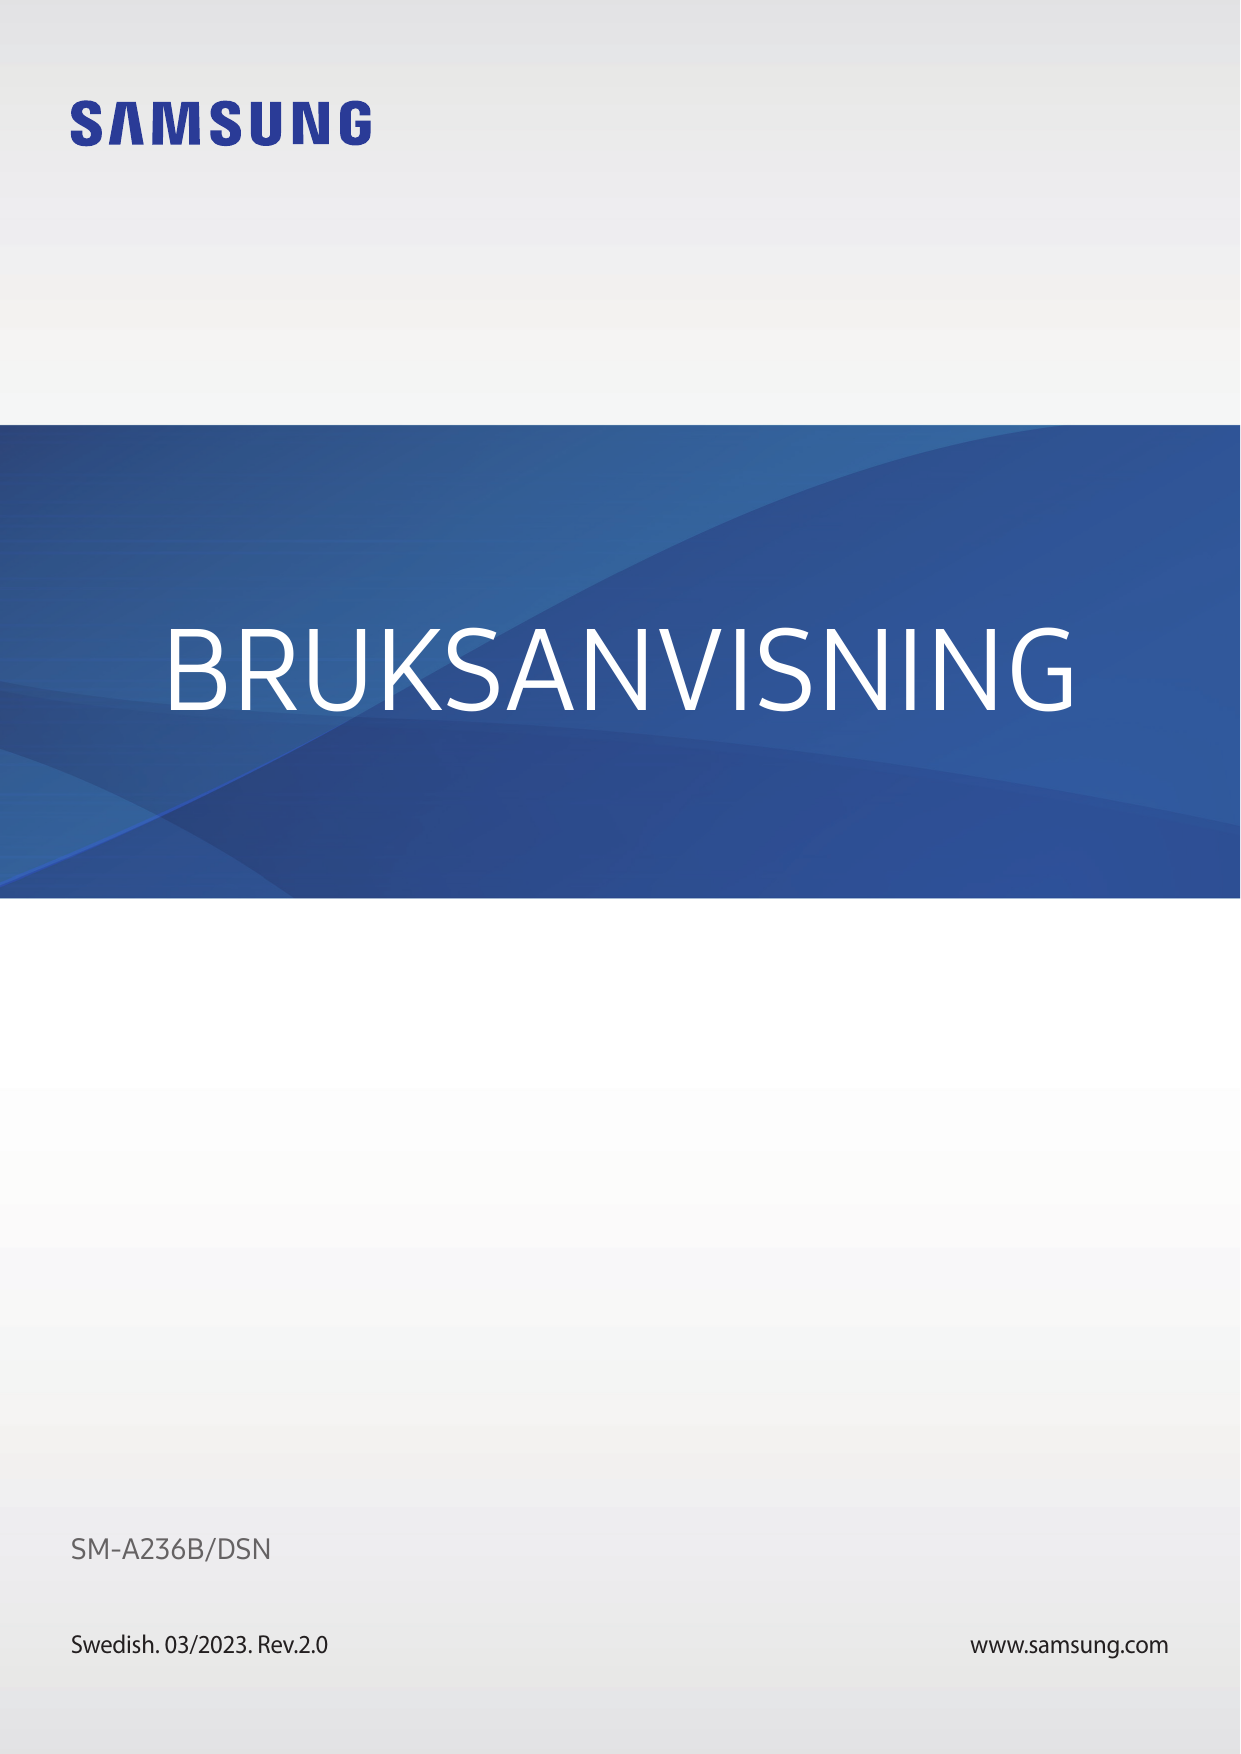 BRUKSANVISNINGSM-A236B/DSNSwedish. 03/2023. Rev.2.0www.samsung.com